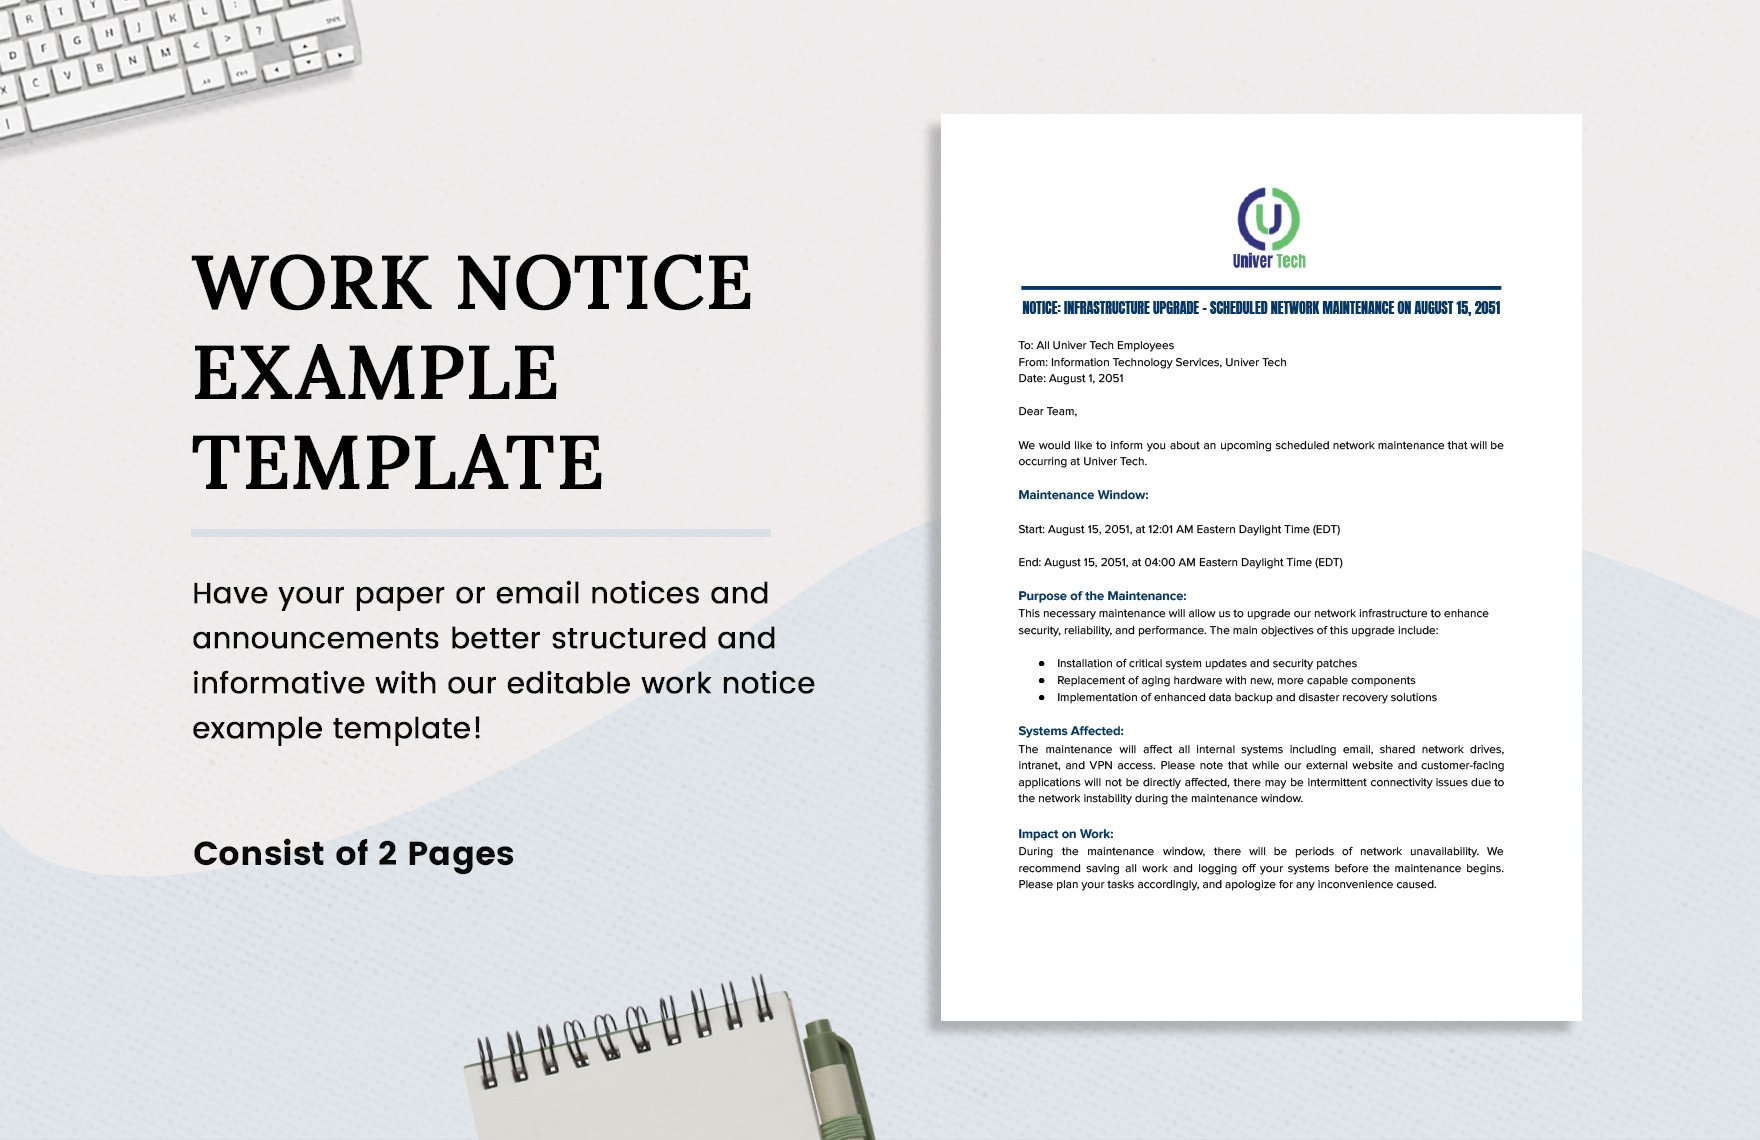 Work Notice Example Template